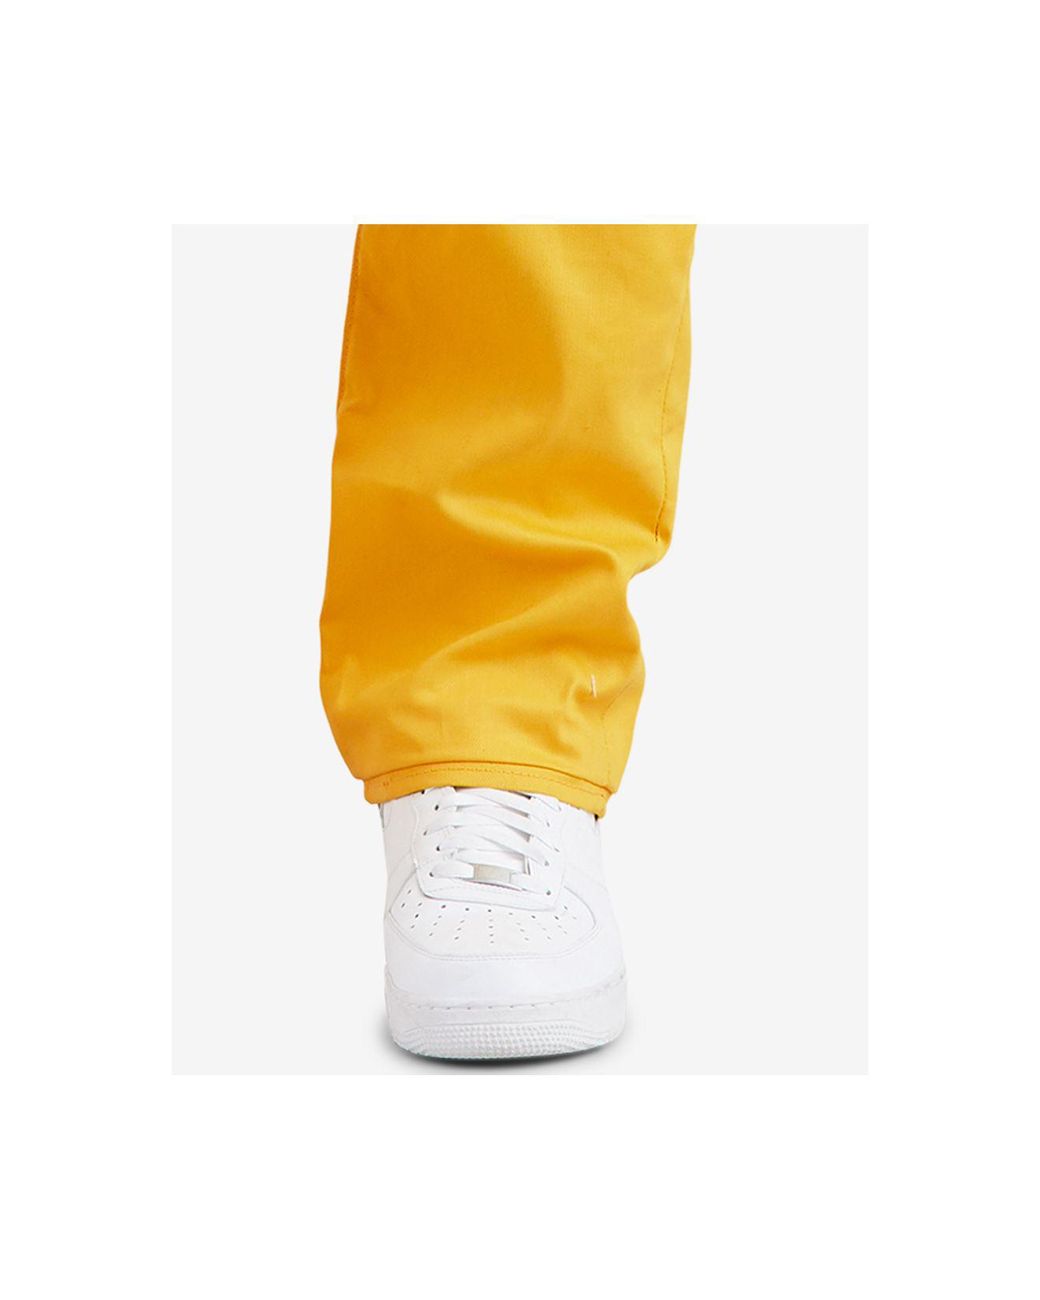 Levi's Denim 501 Original Fit Jeans in Yellow for Men | Lyst